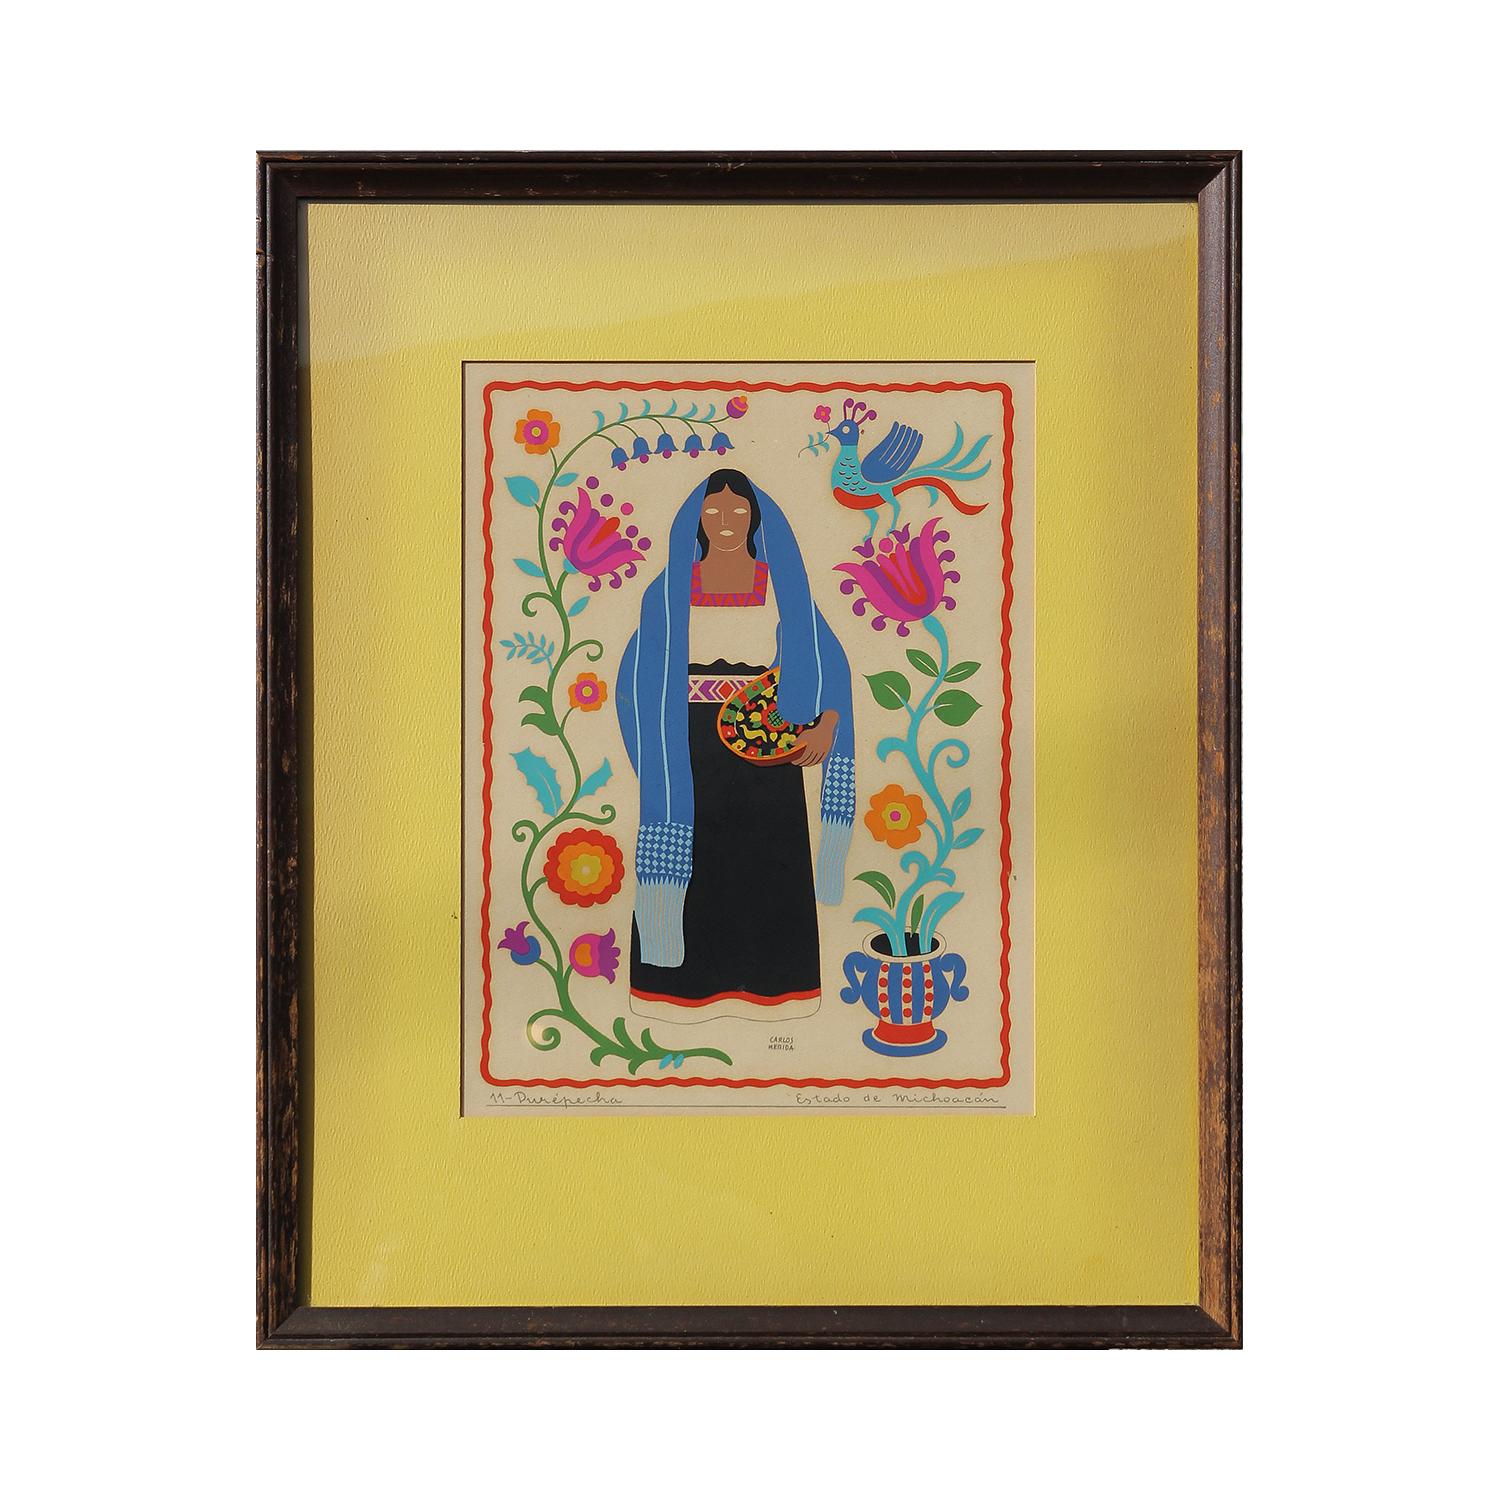 Plate 11: a Purépecha (or Tarascan) Woman from the State of Michoacán Silkscreen - Print by Carlos Mérida